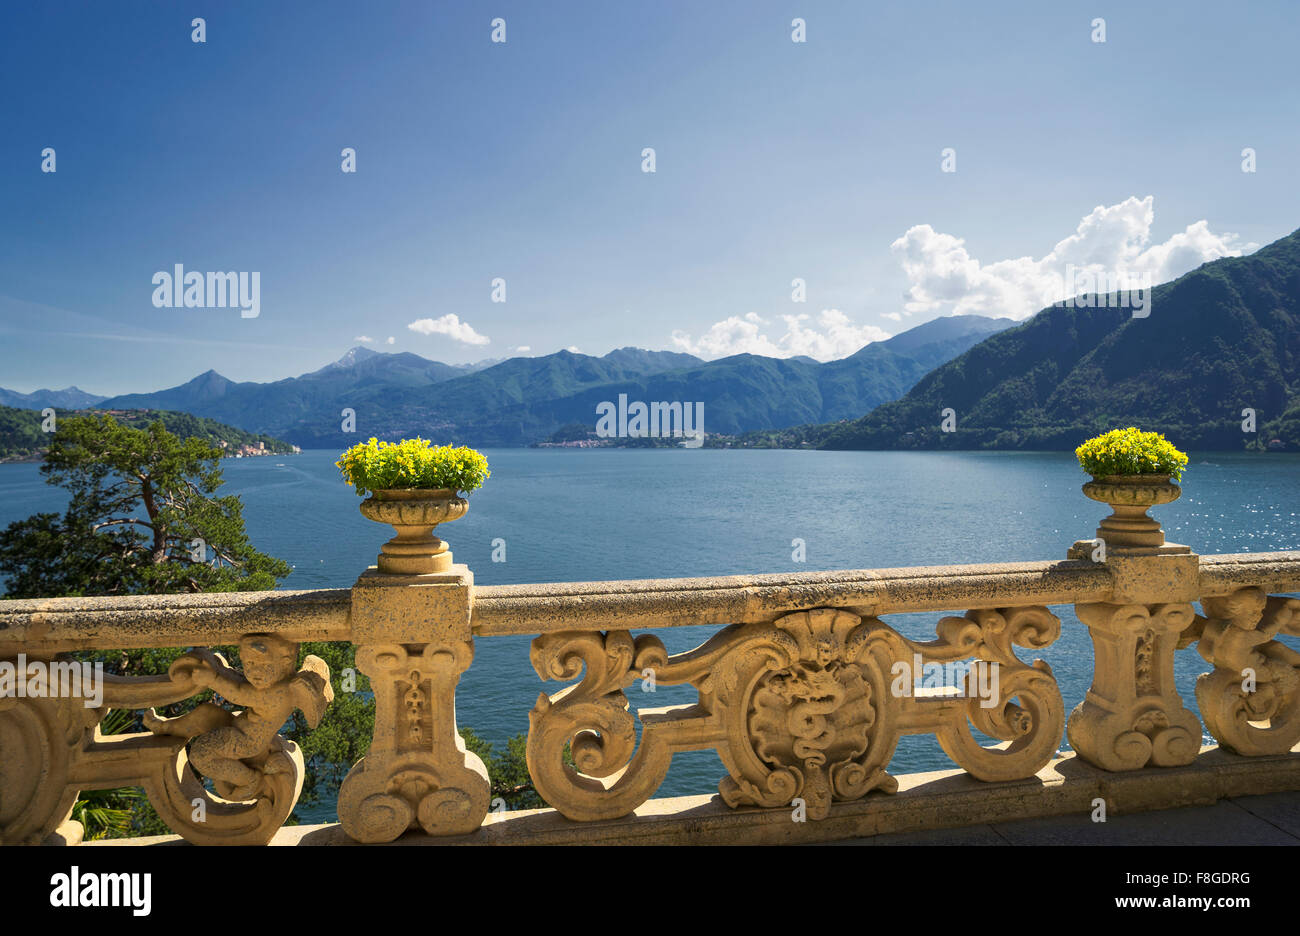 Ornate banister at Lake Como, Villa Balbianello, Lake Como, Italy Stock Photo